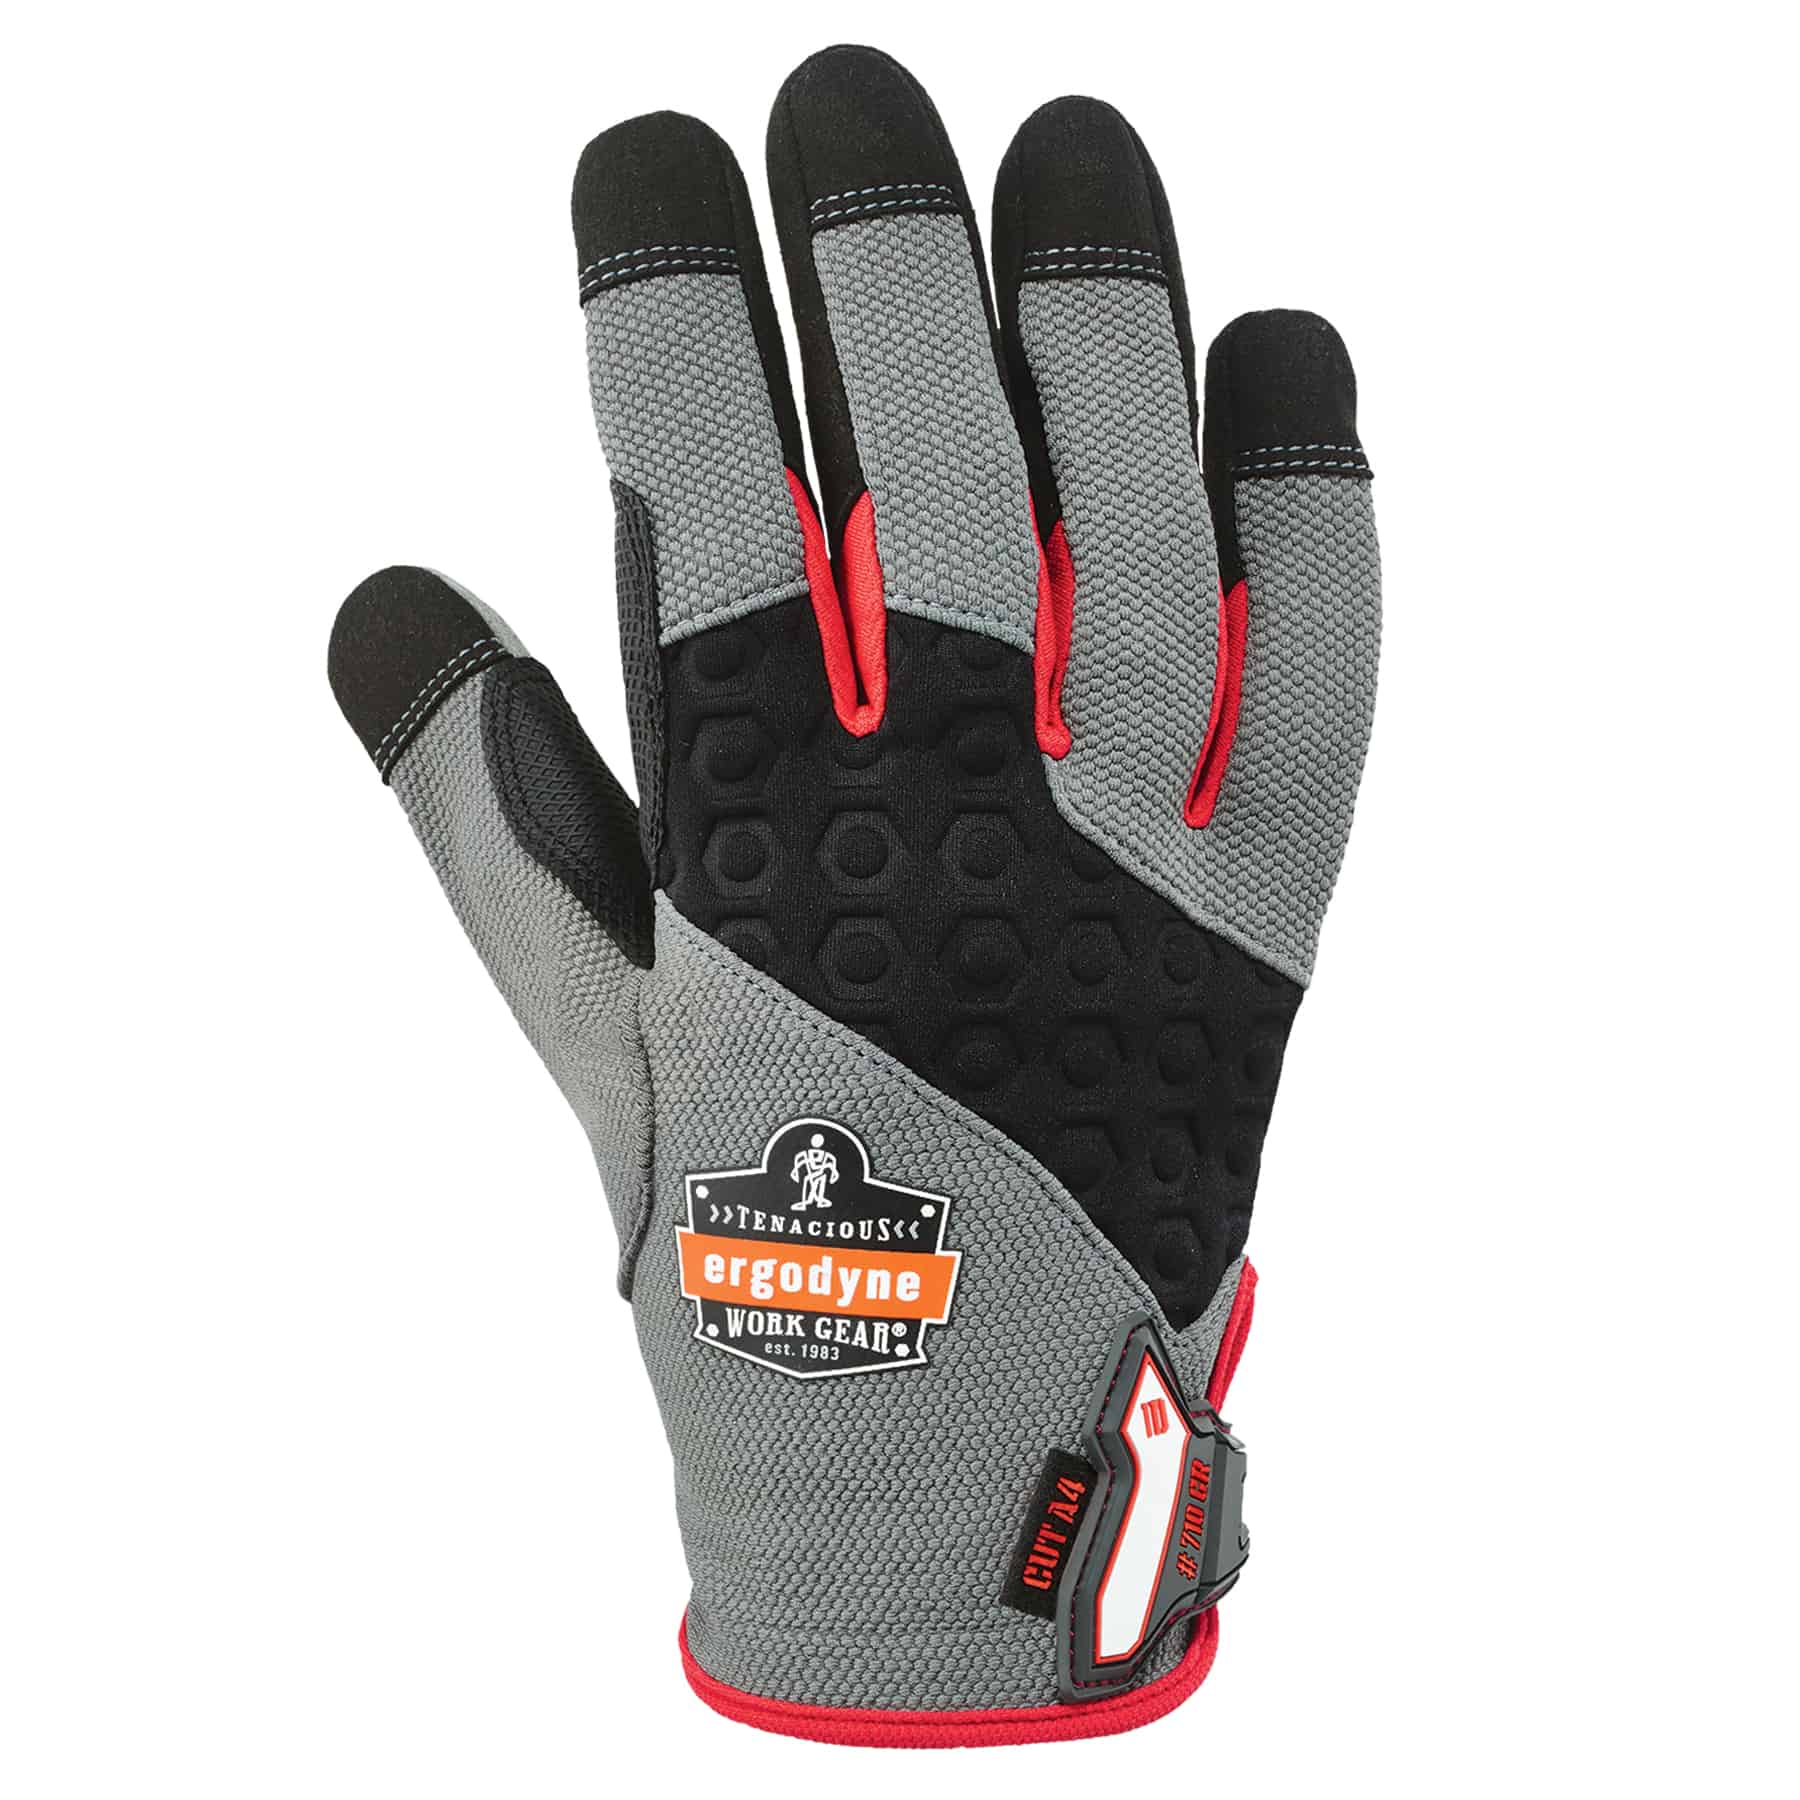 https://www.ergodyne.com/sites/default/files/product-images/17122-710cr-heavy-duty-cut-resistance-gloves-dorsal.jpg